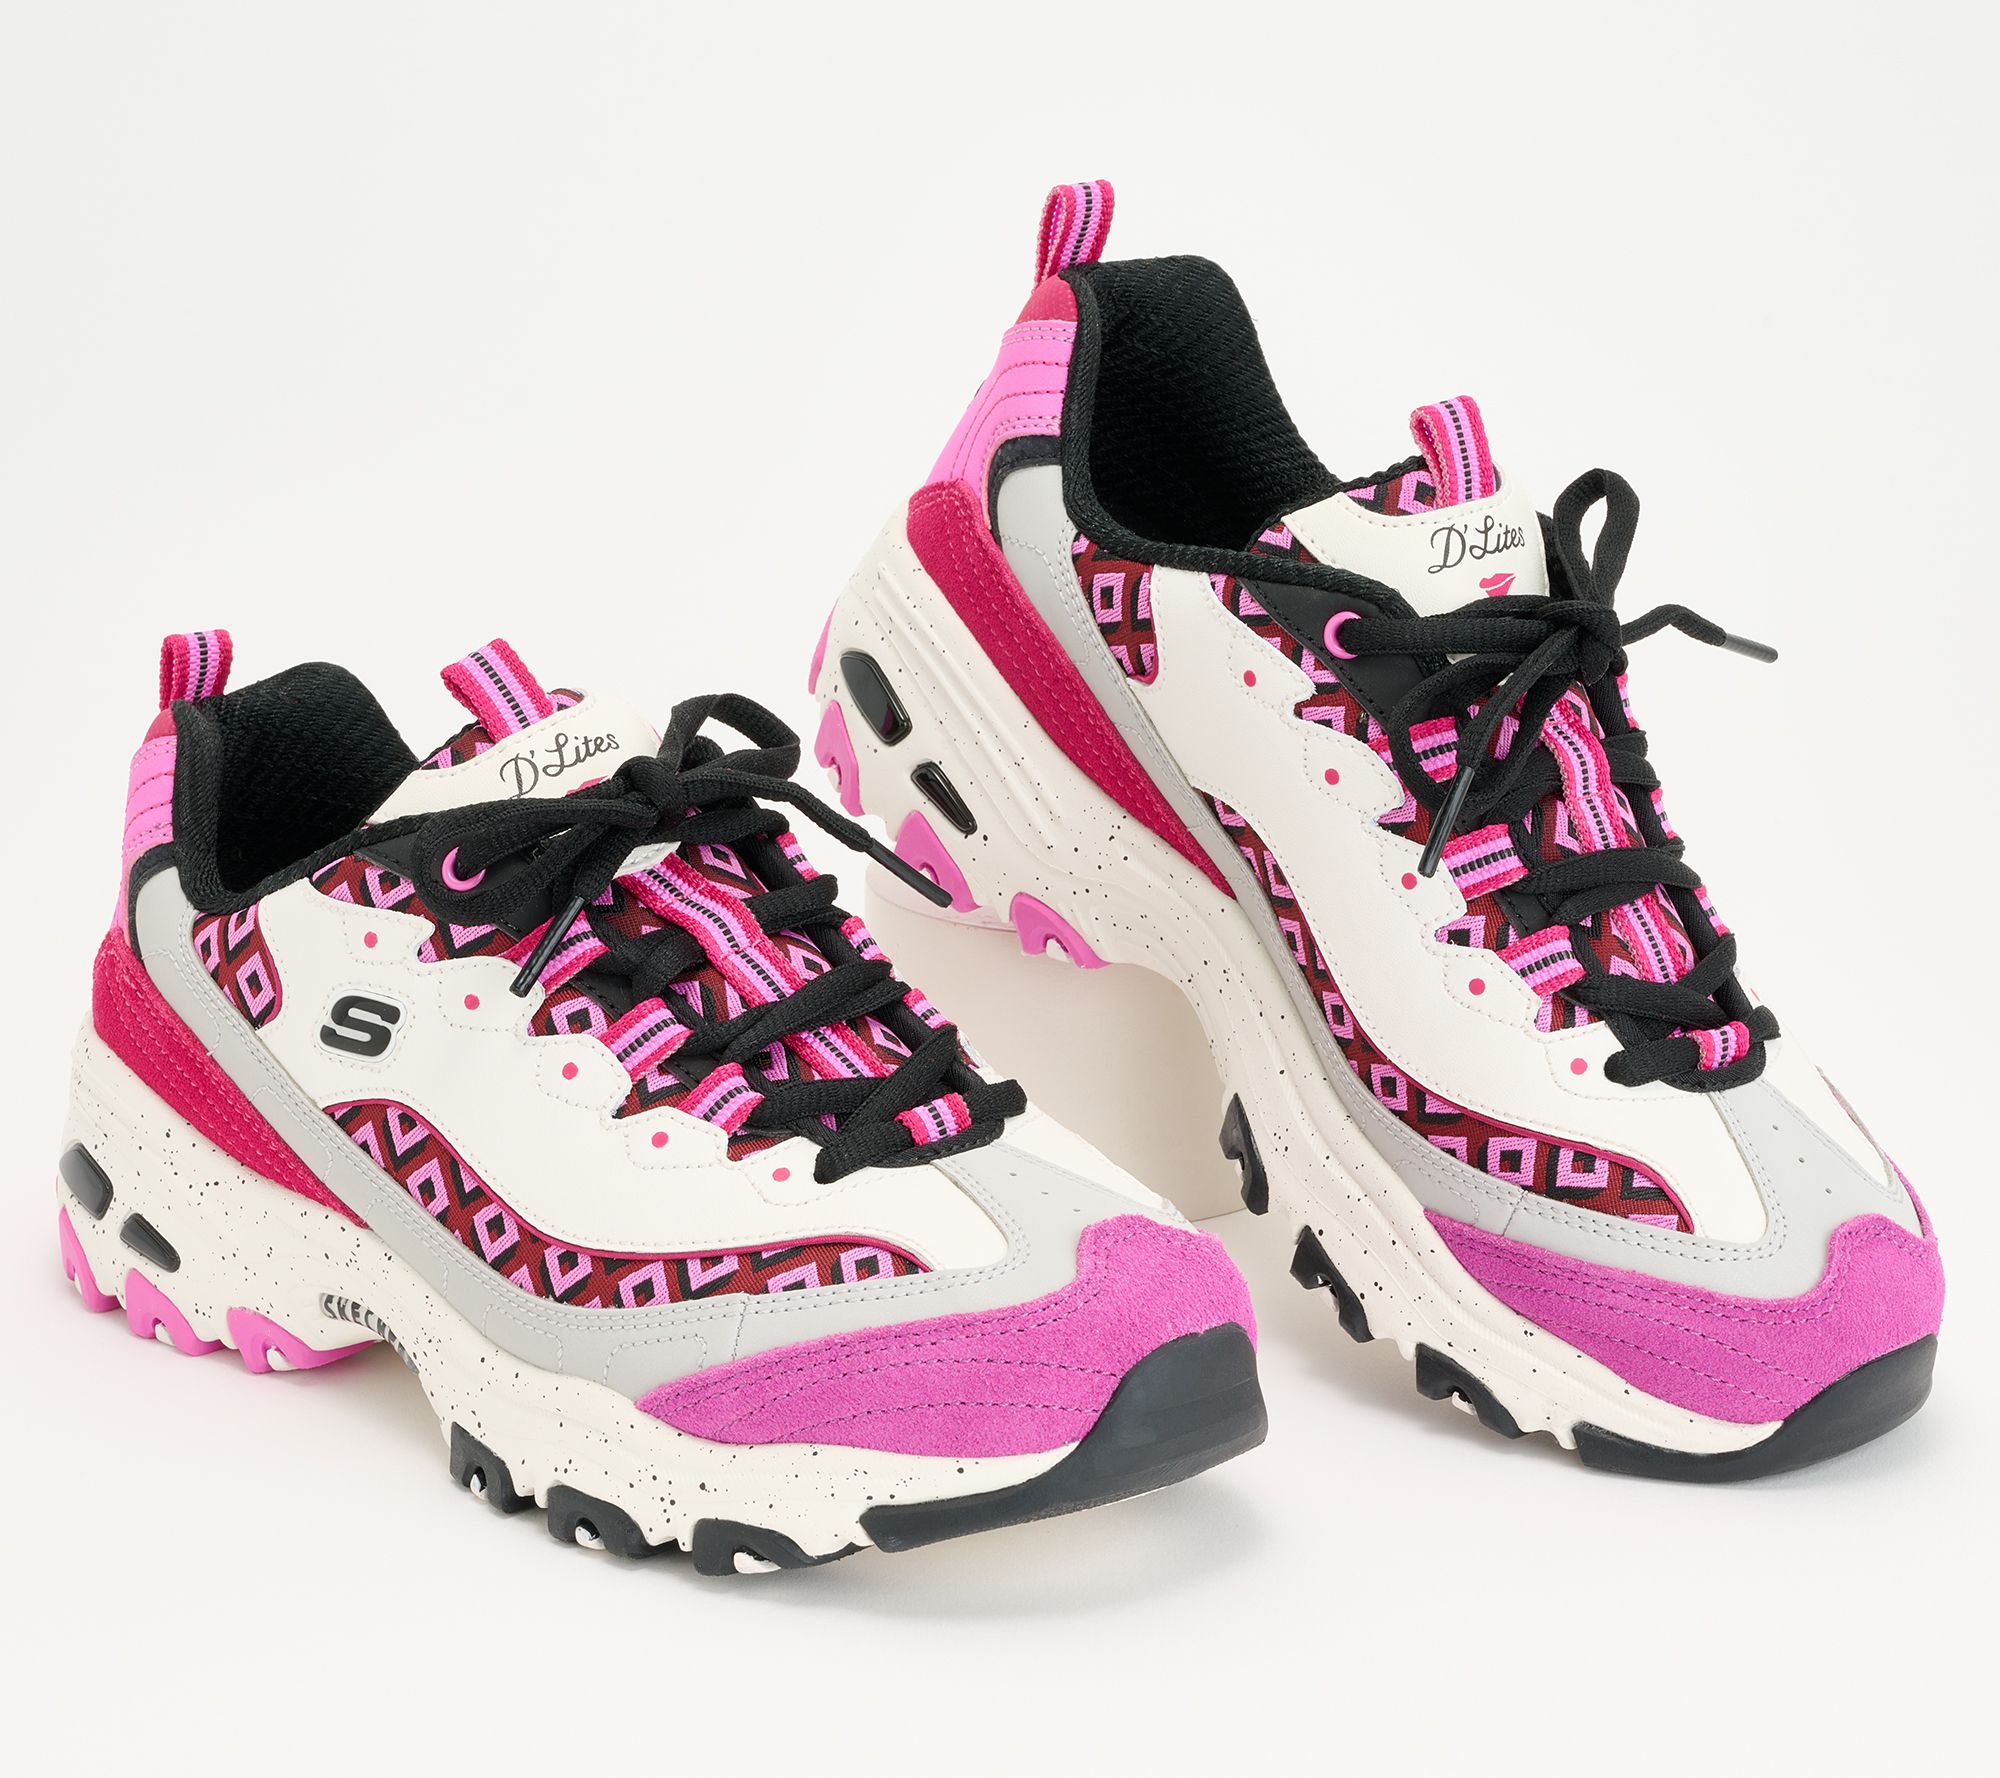 DVF x Skechers D\'Lites Printed Lace-Up Sneaker - Cute Climb